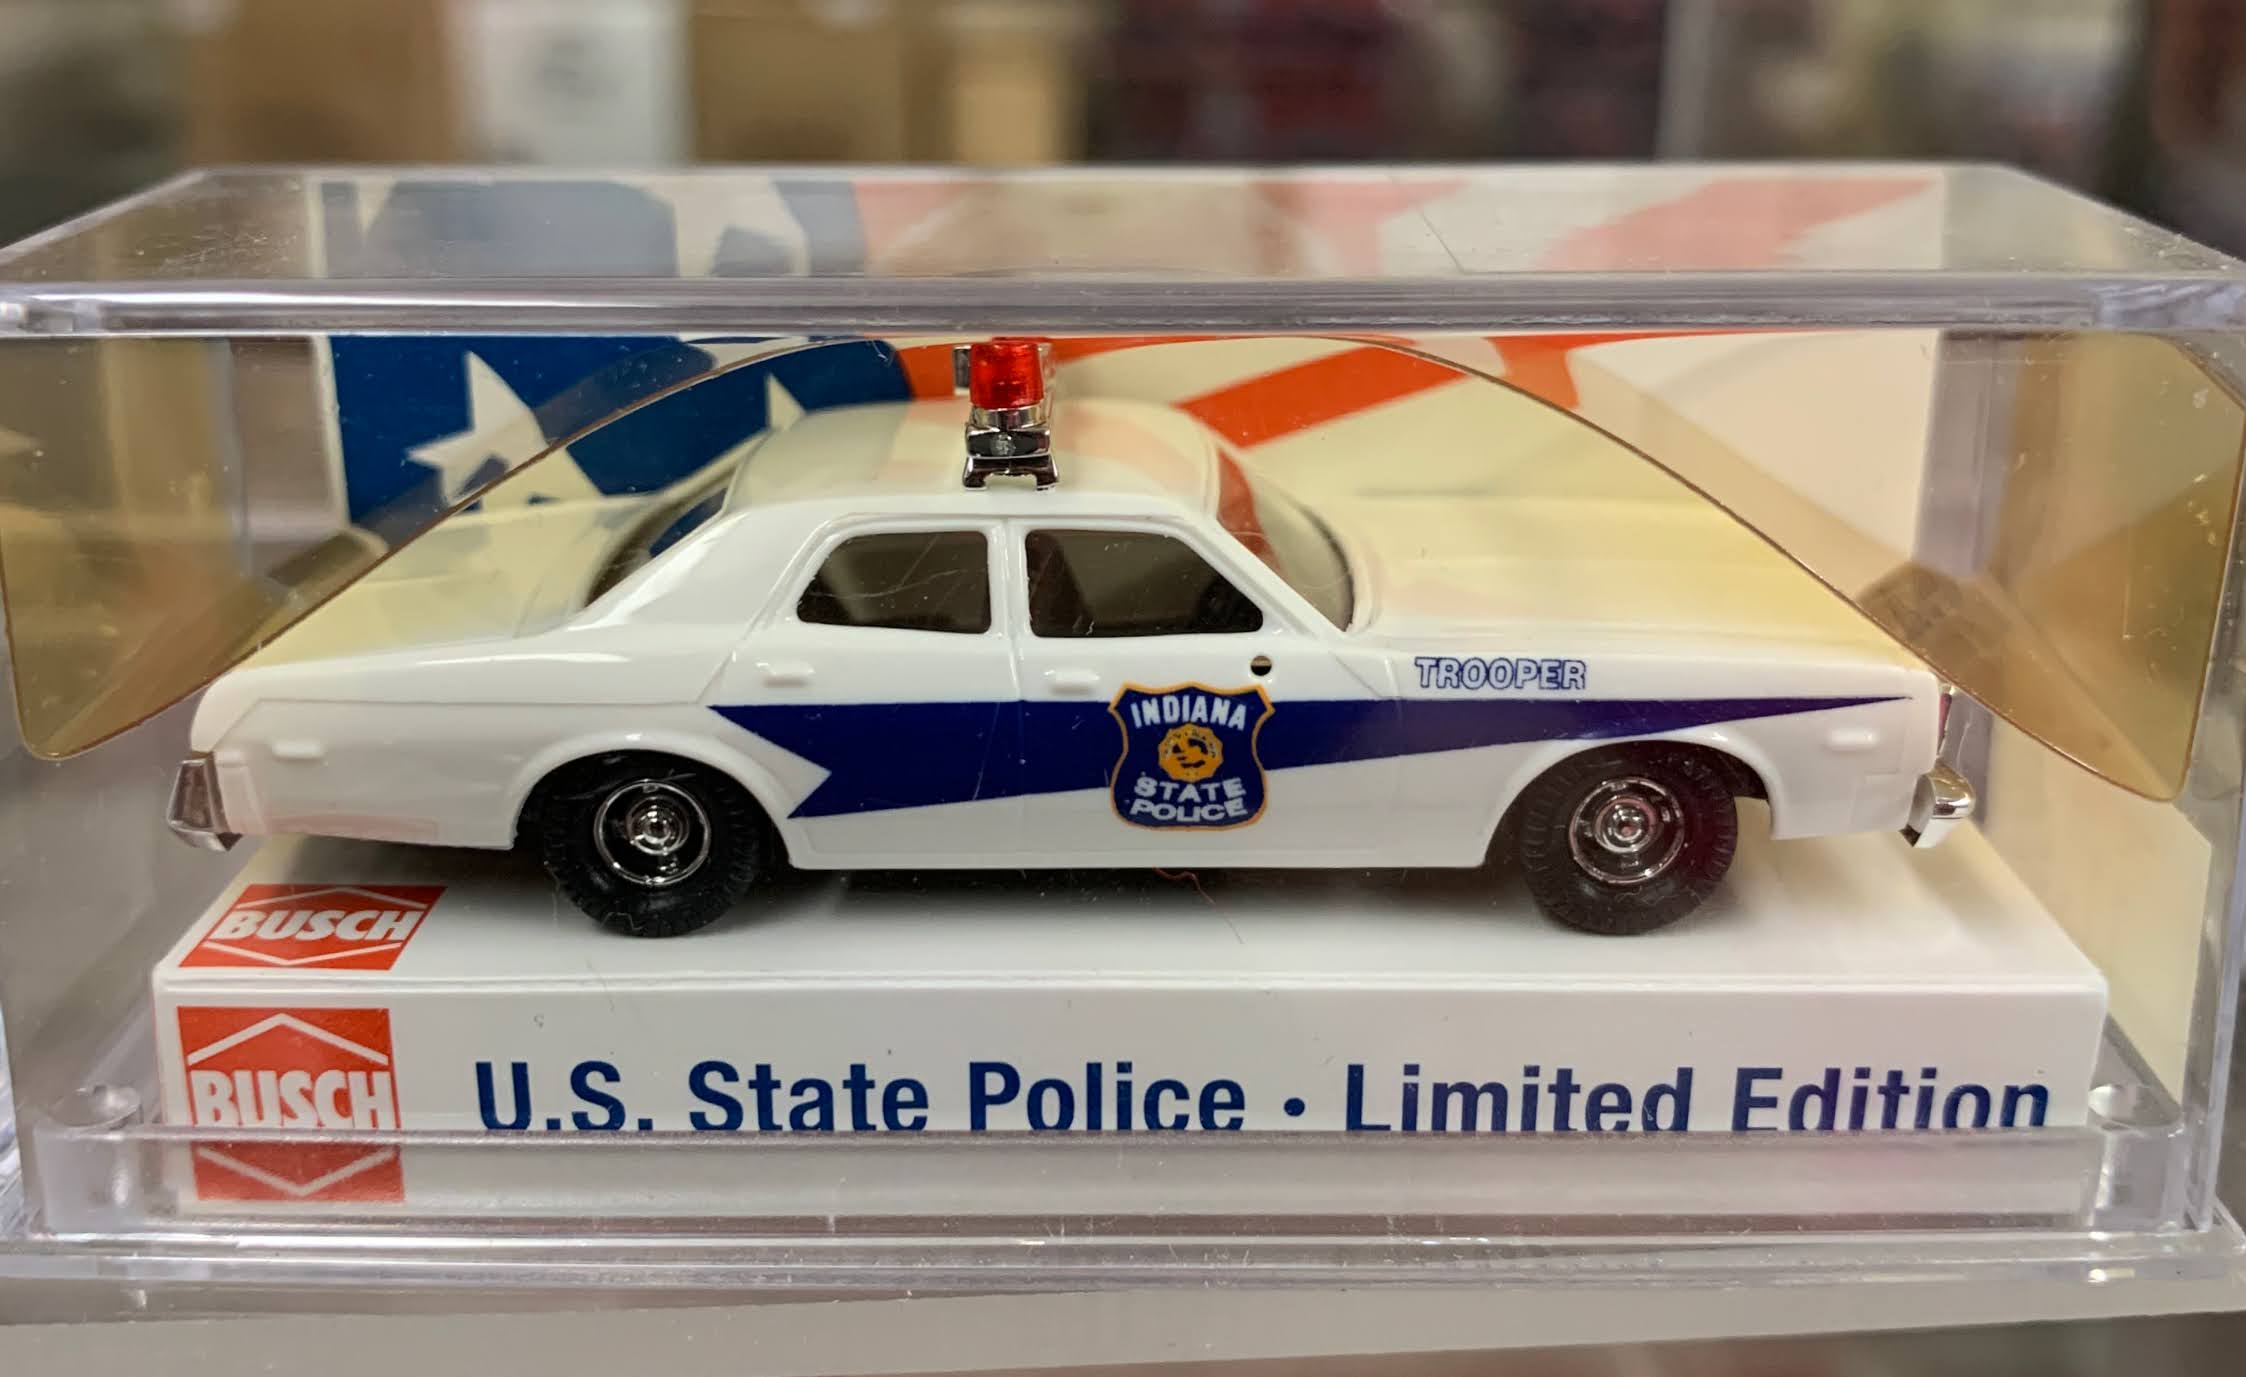 U.S. State Police Series - Indiana